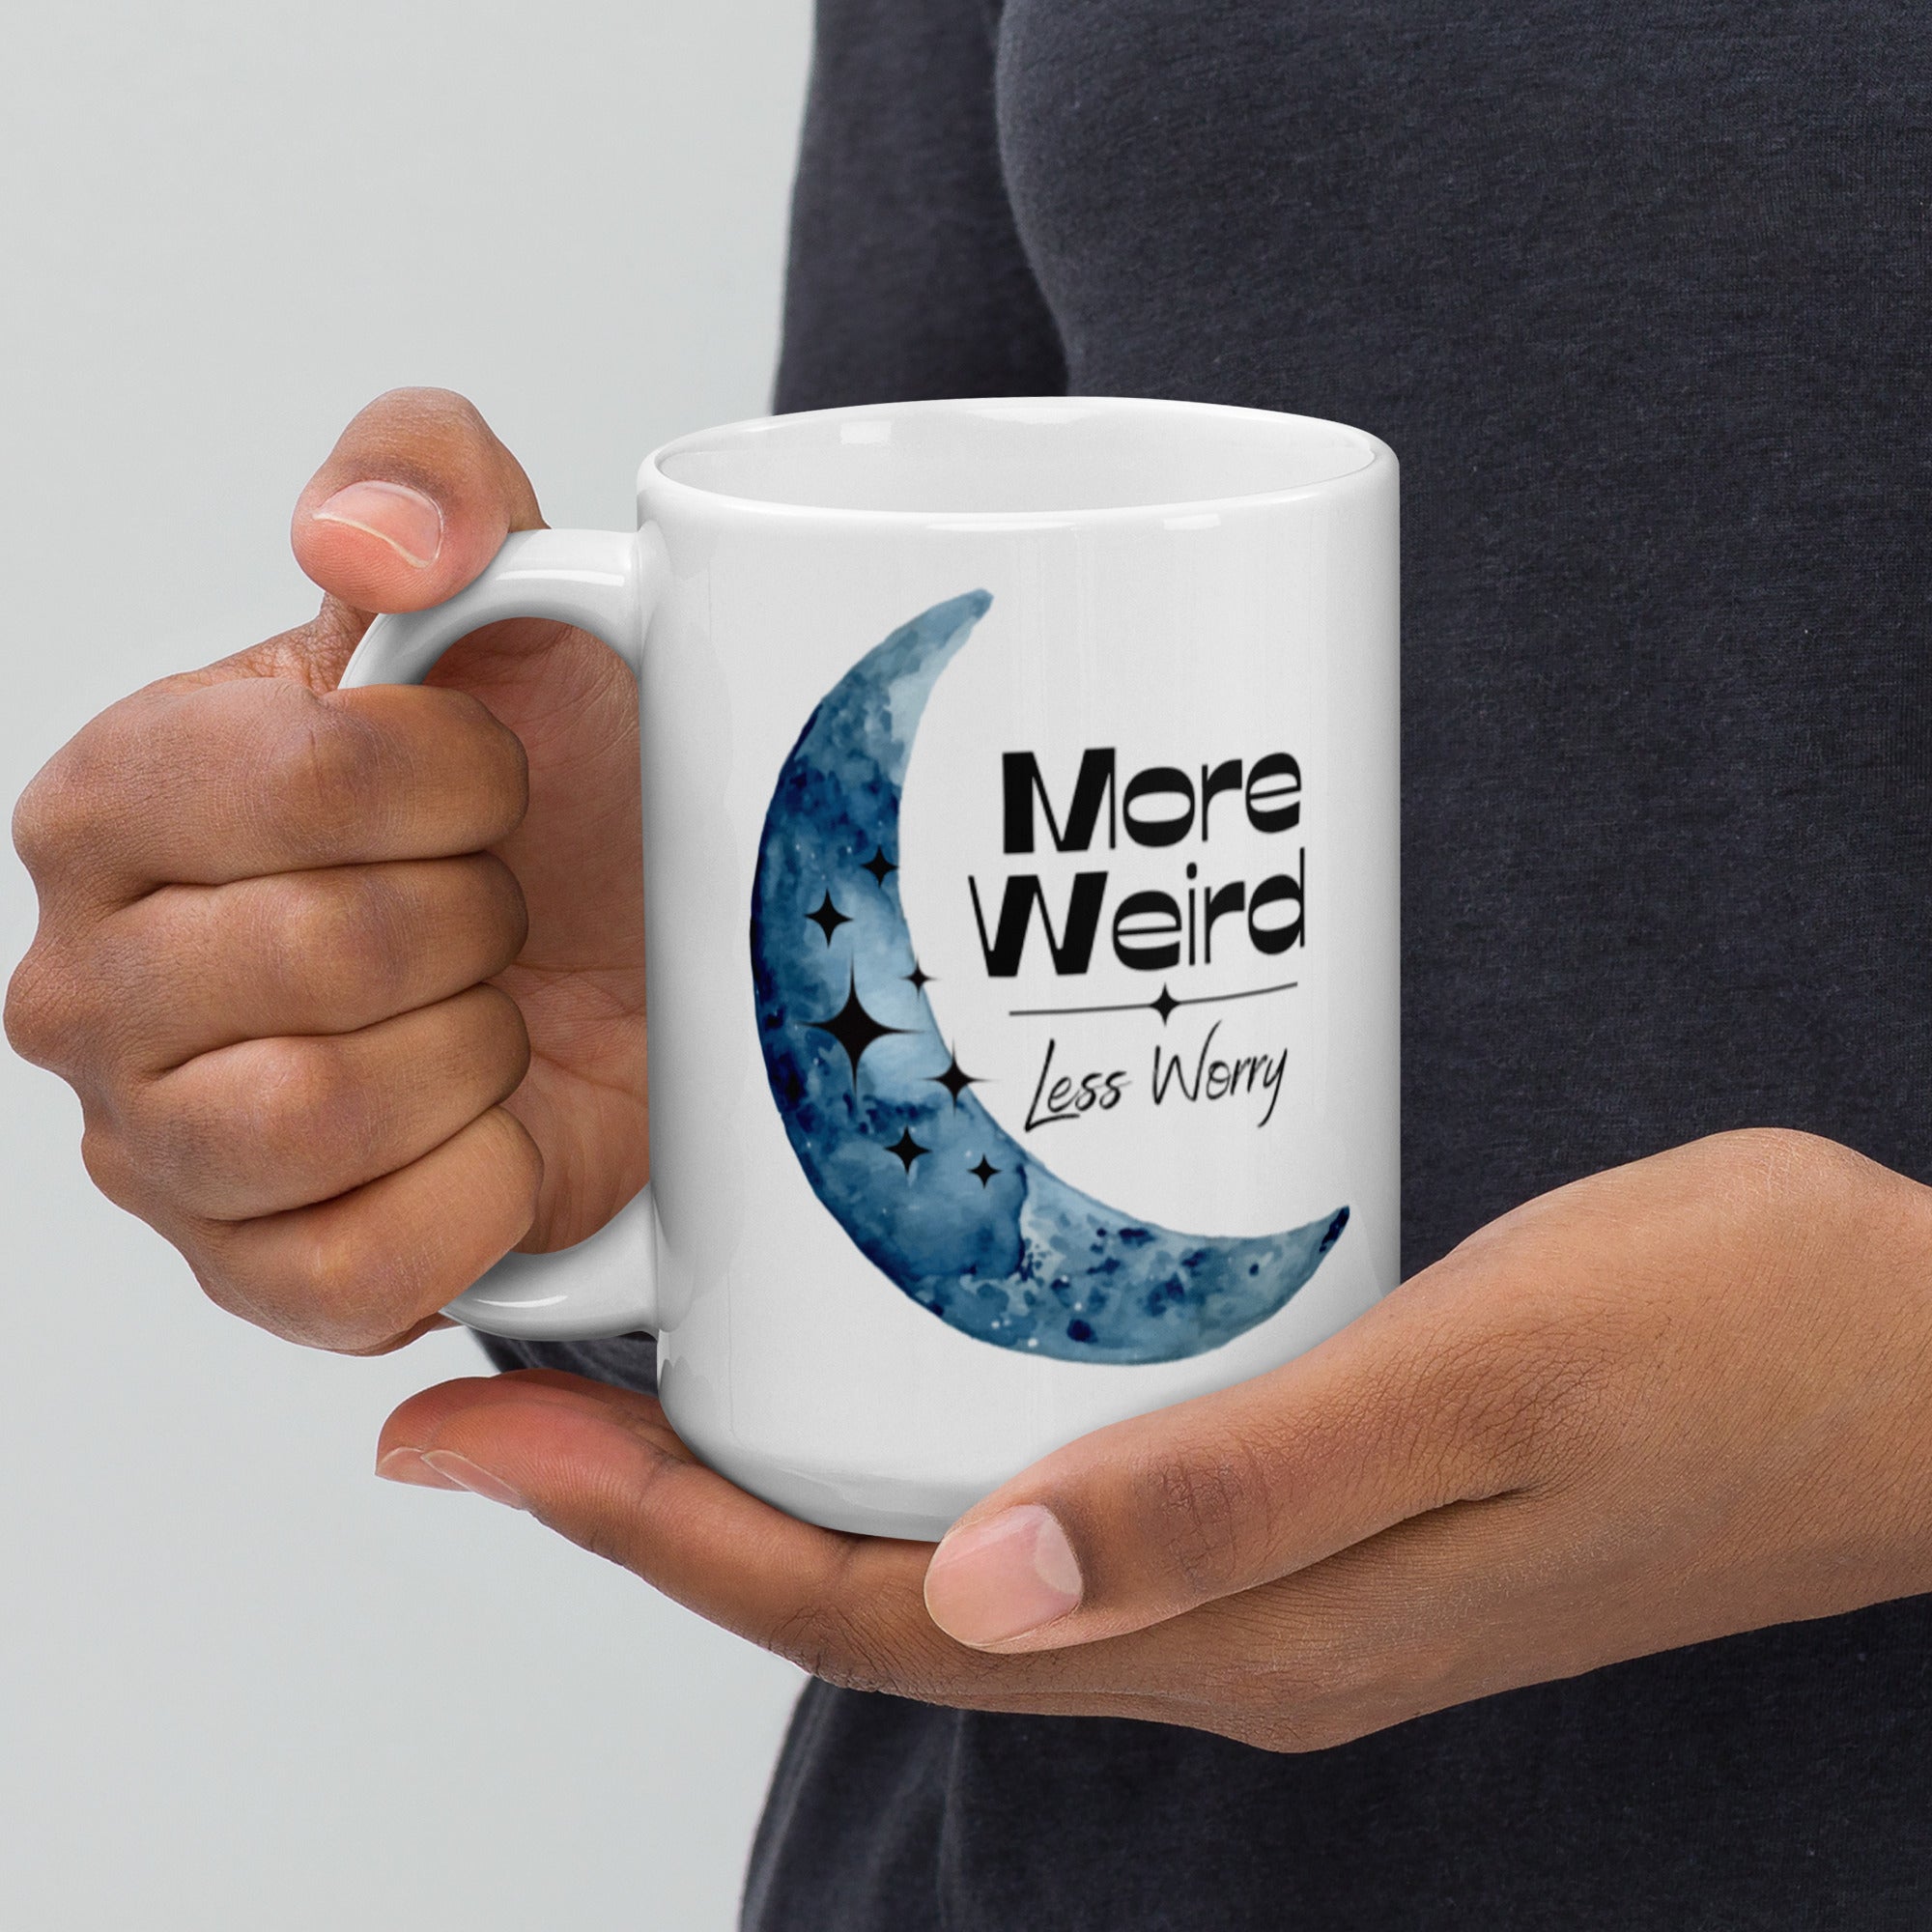 More Weird, Less Worry - White Glossy Mug